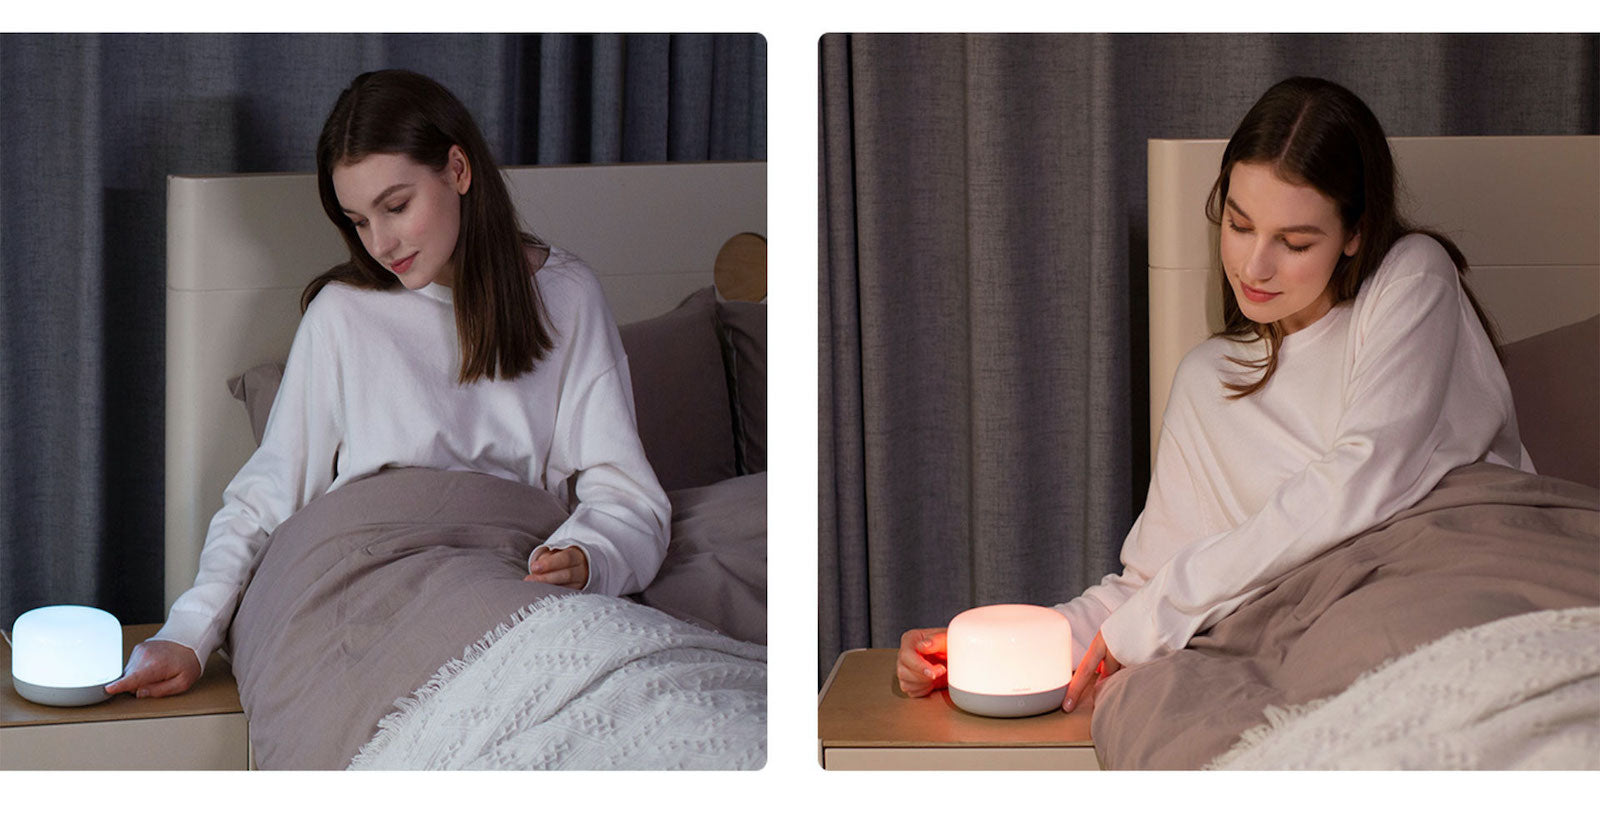 Yeelight LED Bedside Lamp Smart Table Light Homekit Google Voice Control Alexa